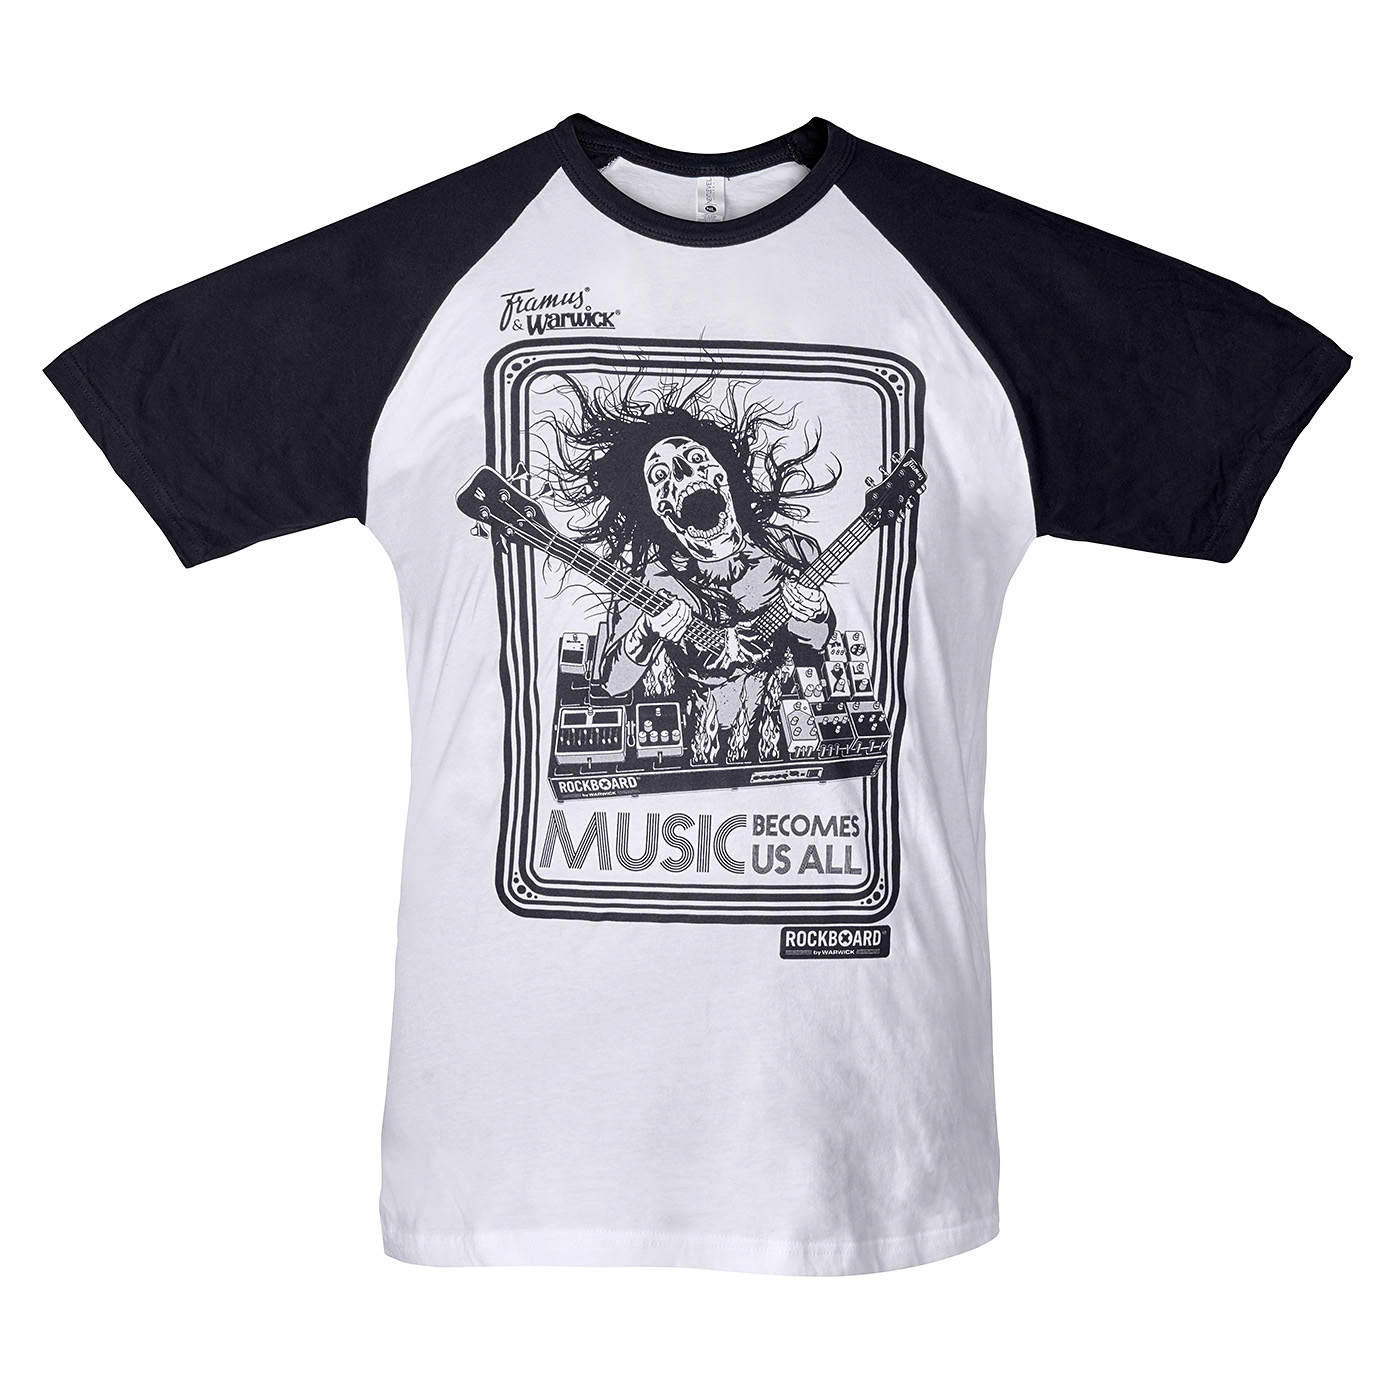 RockBoard Promo - Screamer Baseball T-Shirt White/Black - Size M